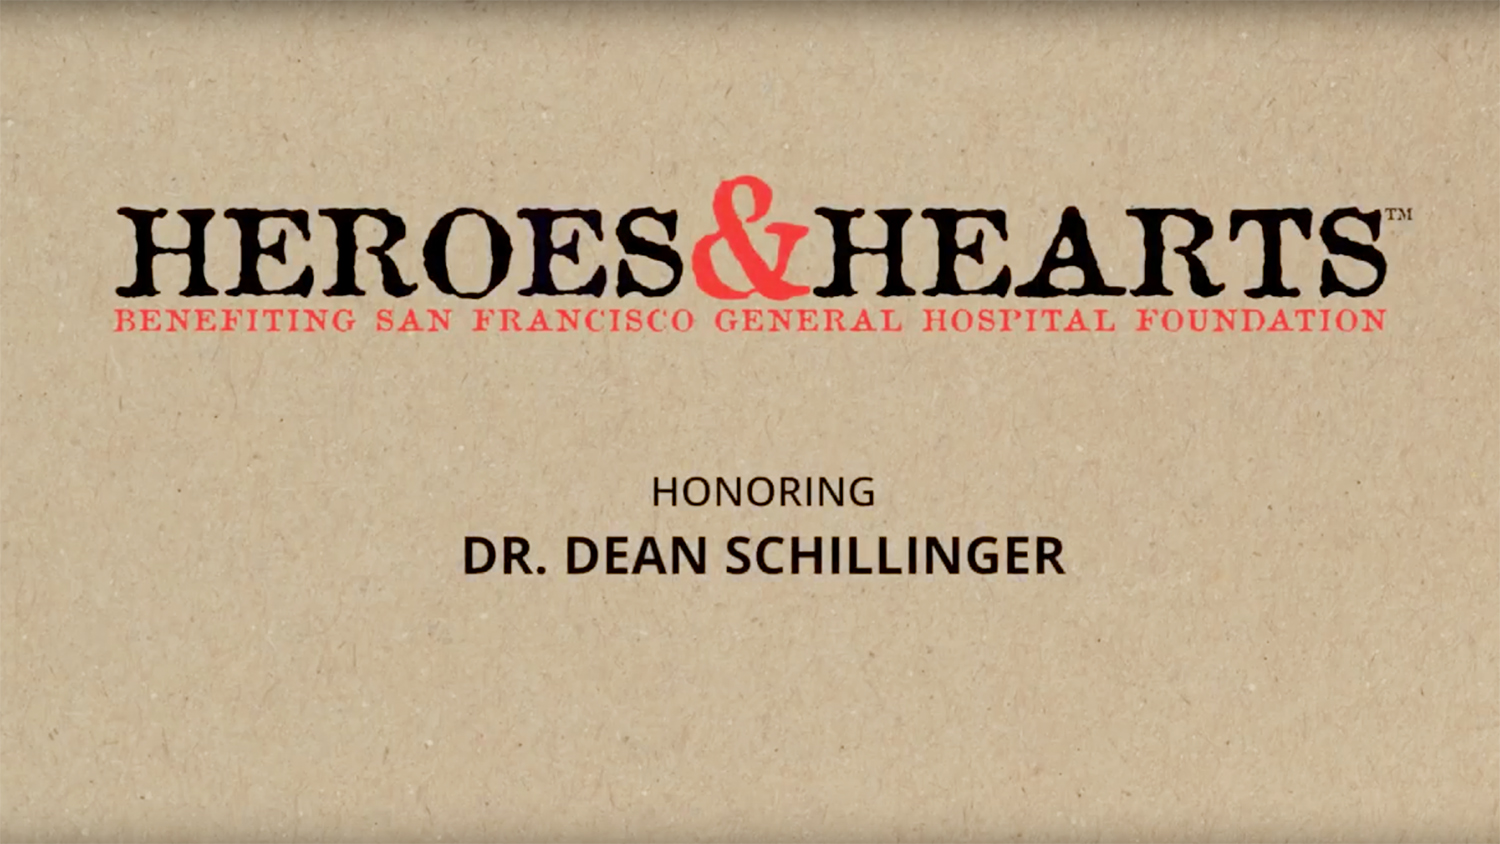 "Heroes & Hearts" benefiting San Francisco General Hospital Foundation. Honoring Dr. Dean Schillinger..